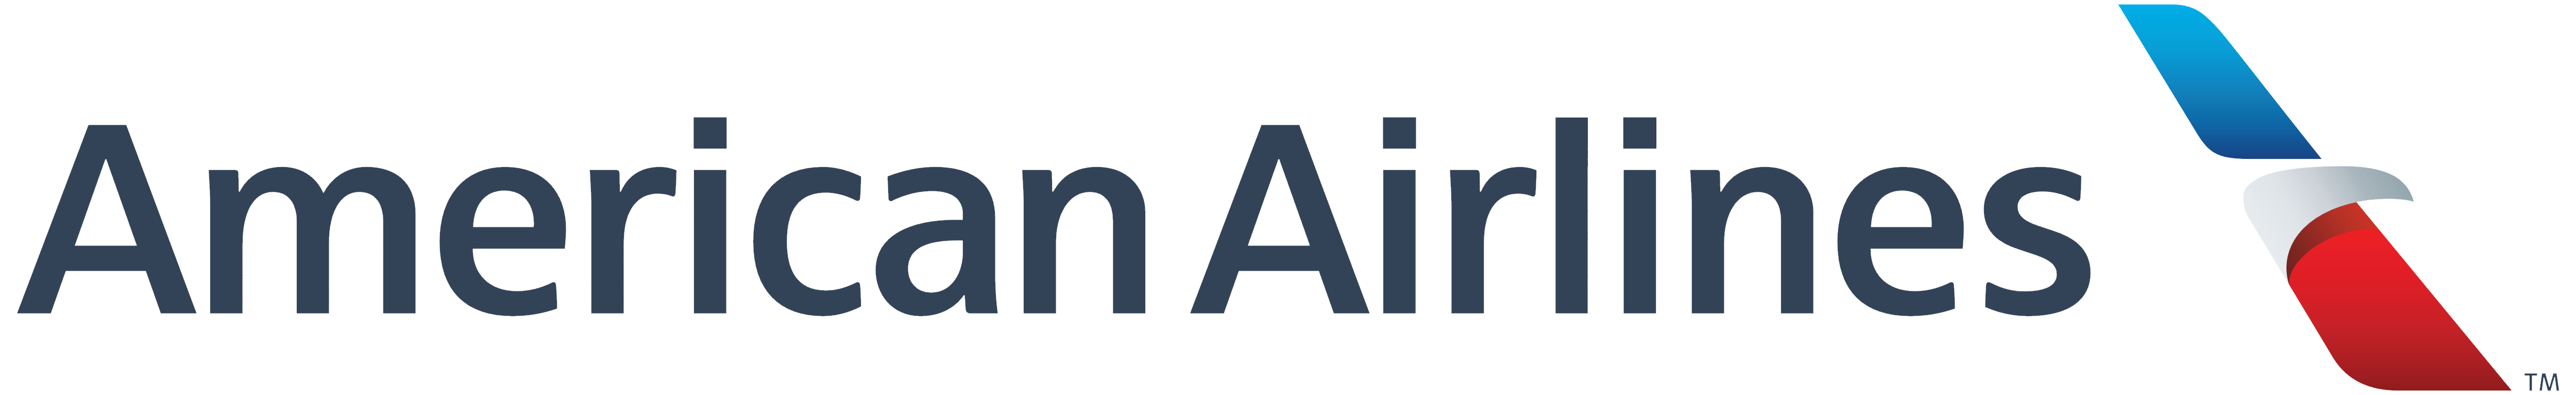 Логотип американских авиакомпаний белый